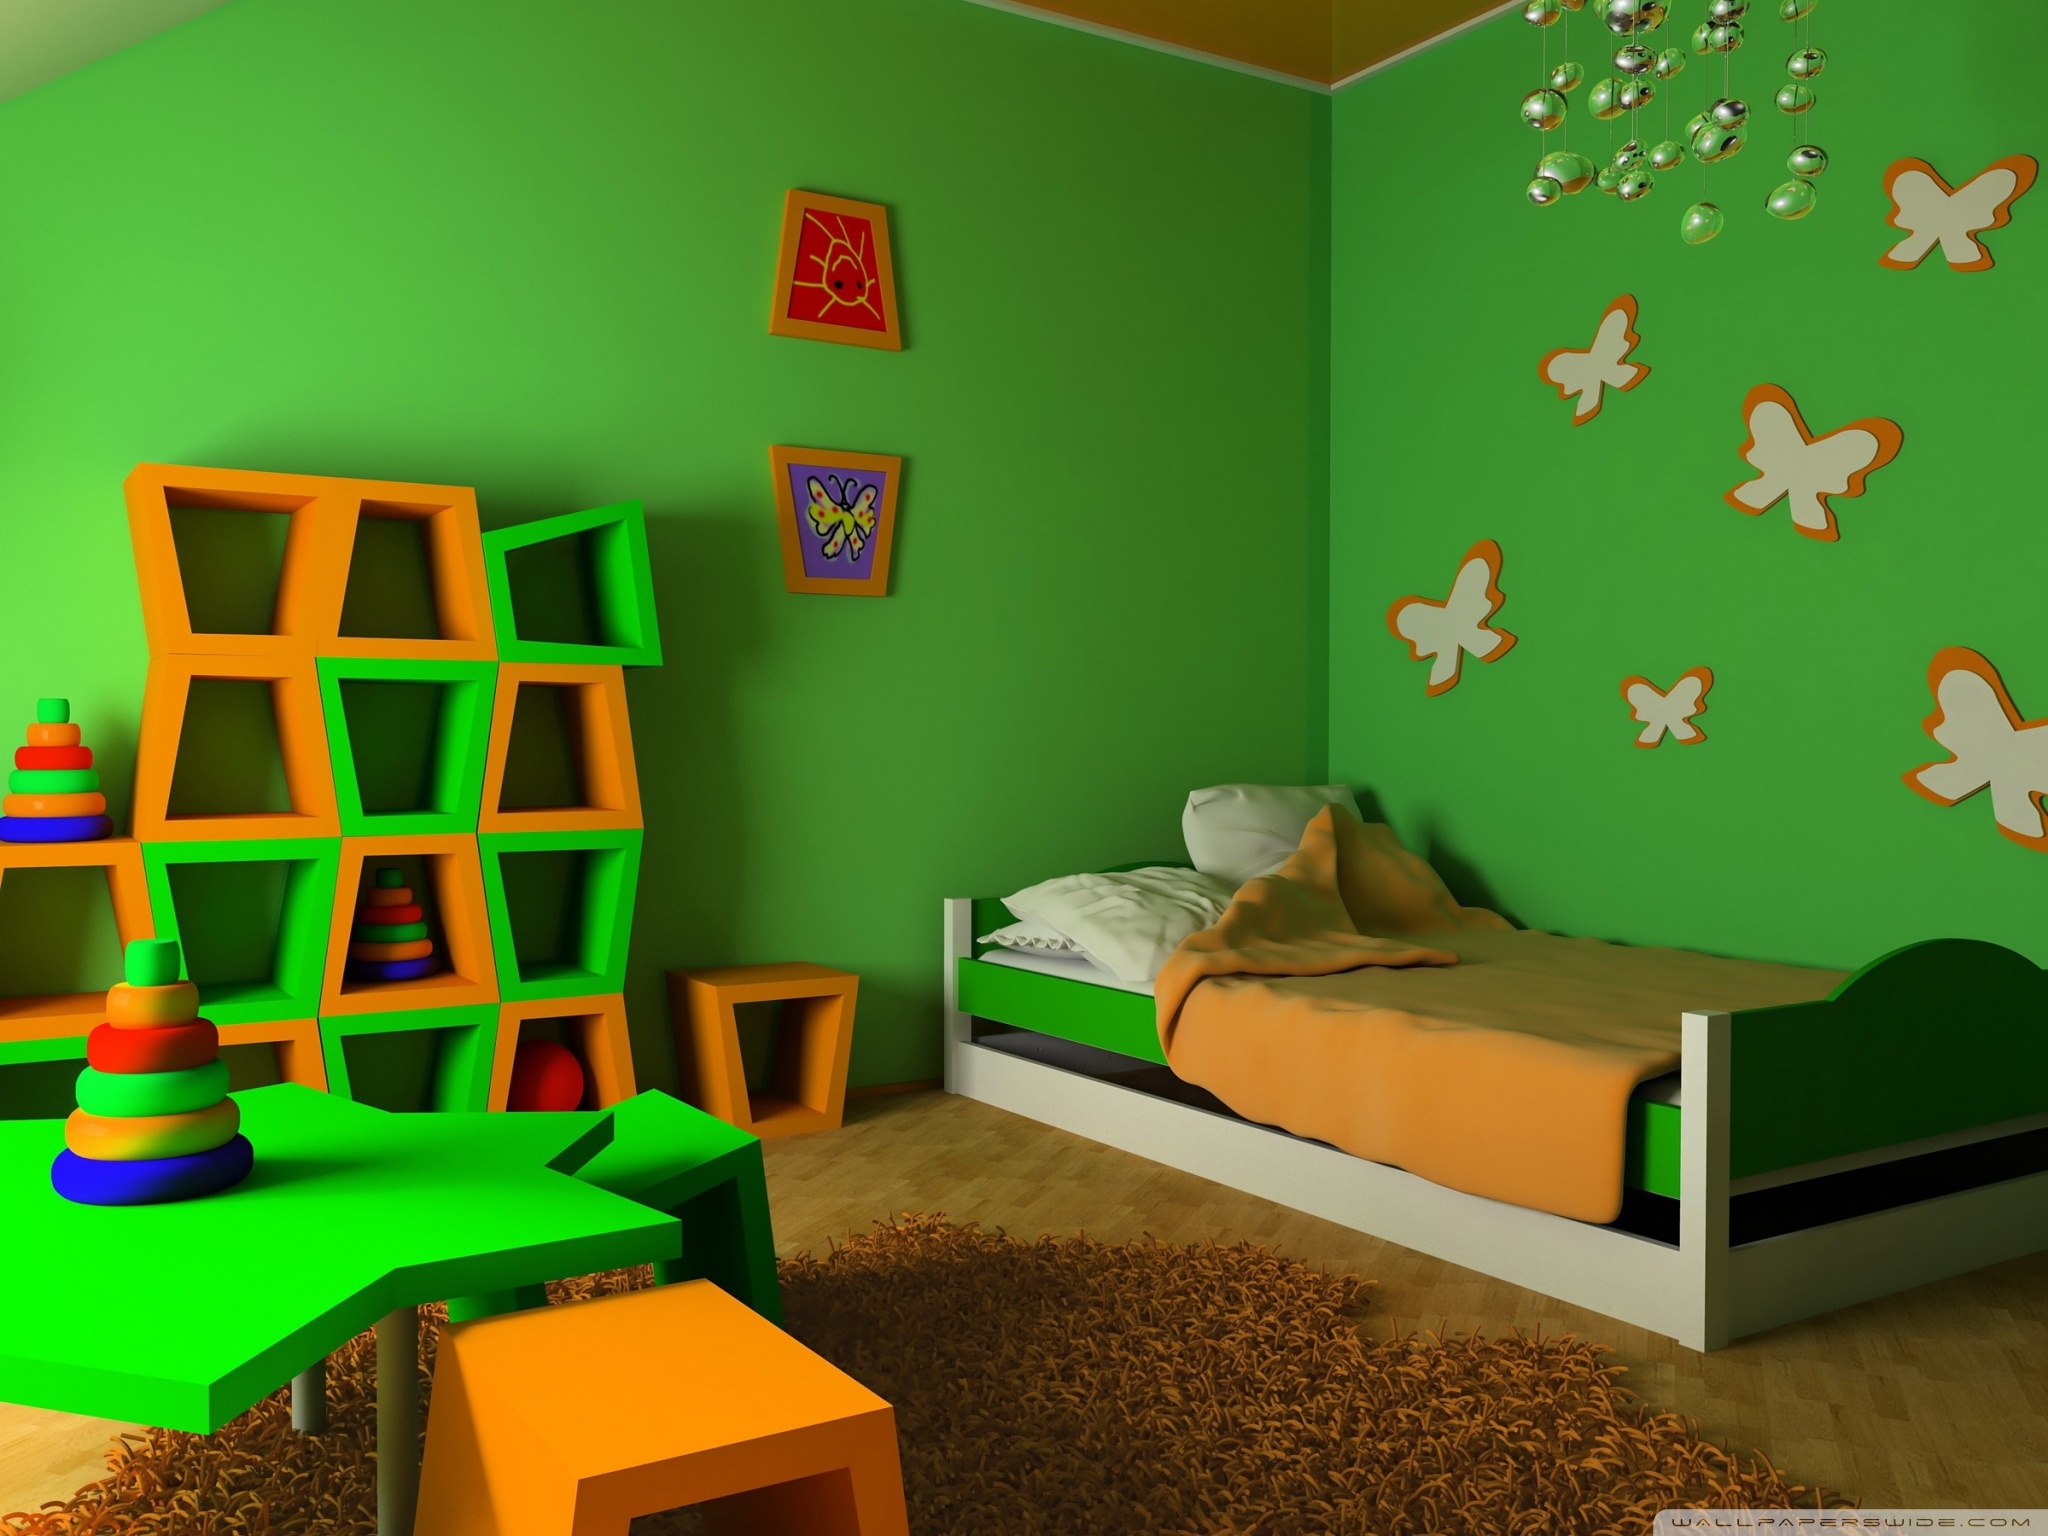 Children Bedroom Green Walls Ultra Hd Desktop Background Wallpaper For 4k Uhd Tv Multi Display Dual Monitor Tablet Smartphone